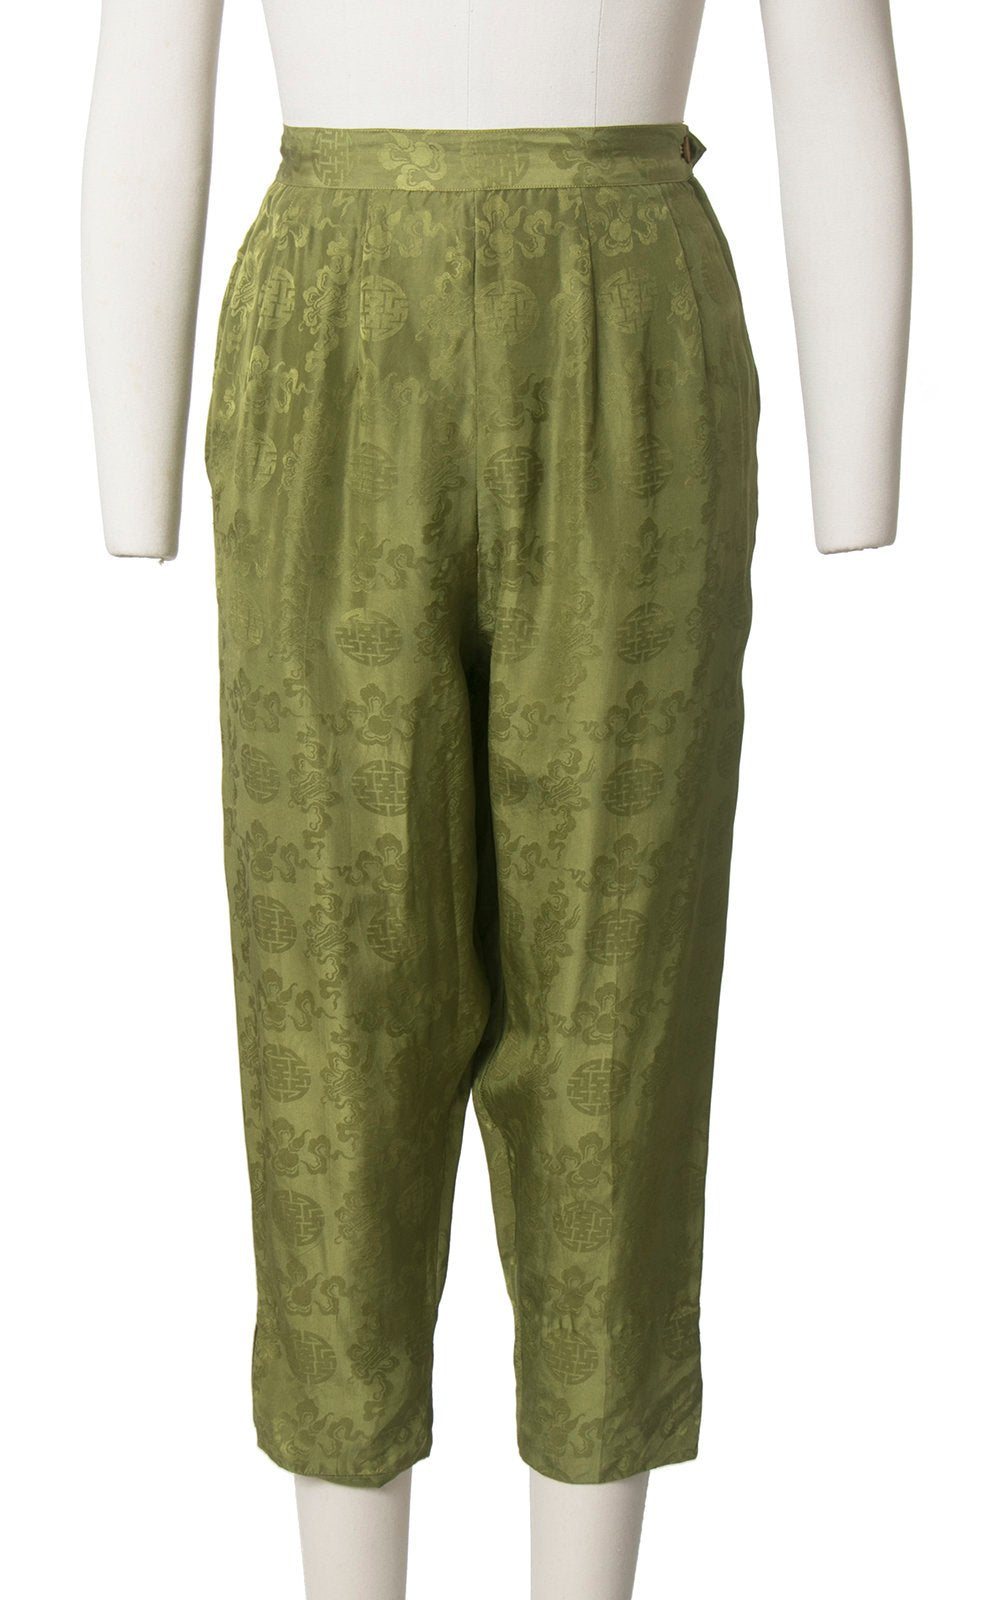 Vintage 1950s 1960s Capri Pants | 50s 60s Silk Asian Jacquard Olive Green High Waisted Cigarette Pants (small)